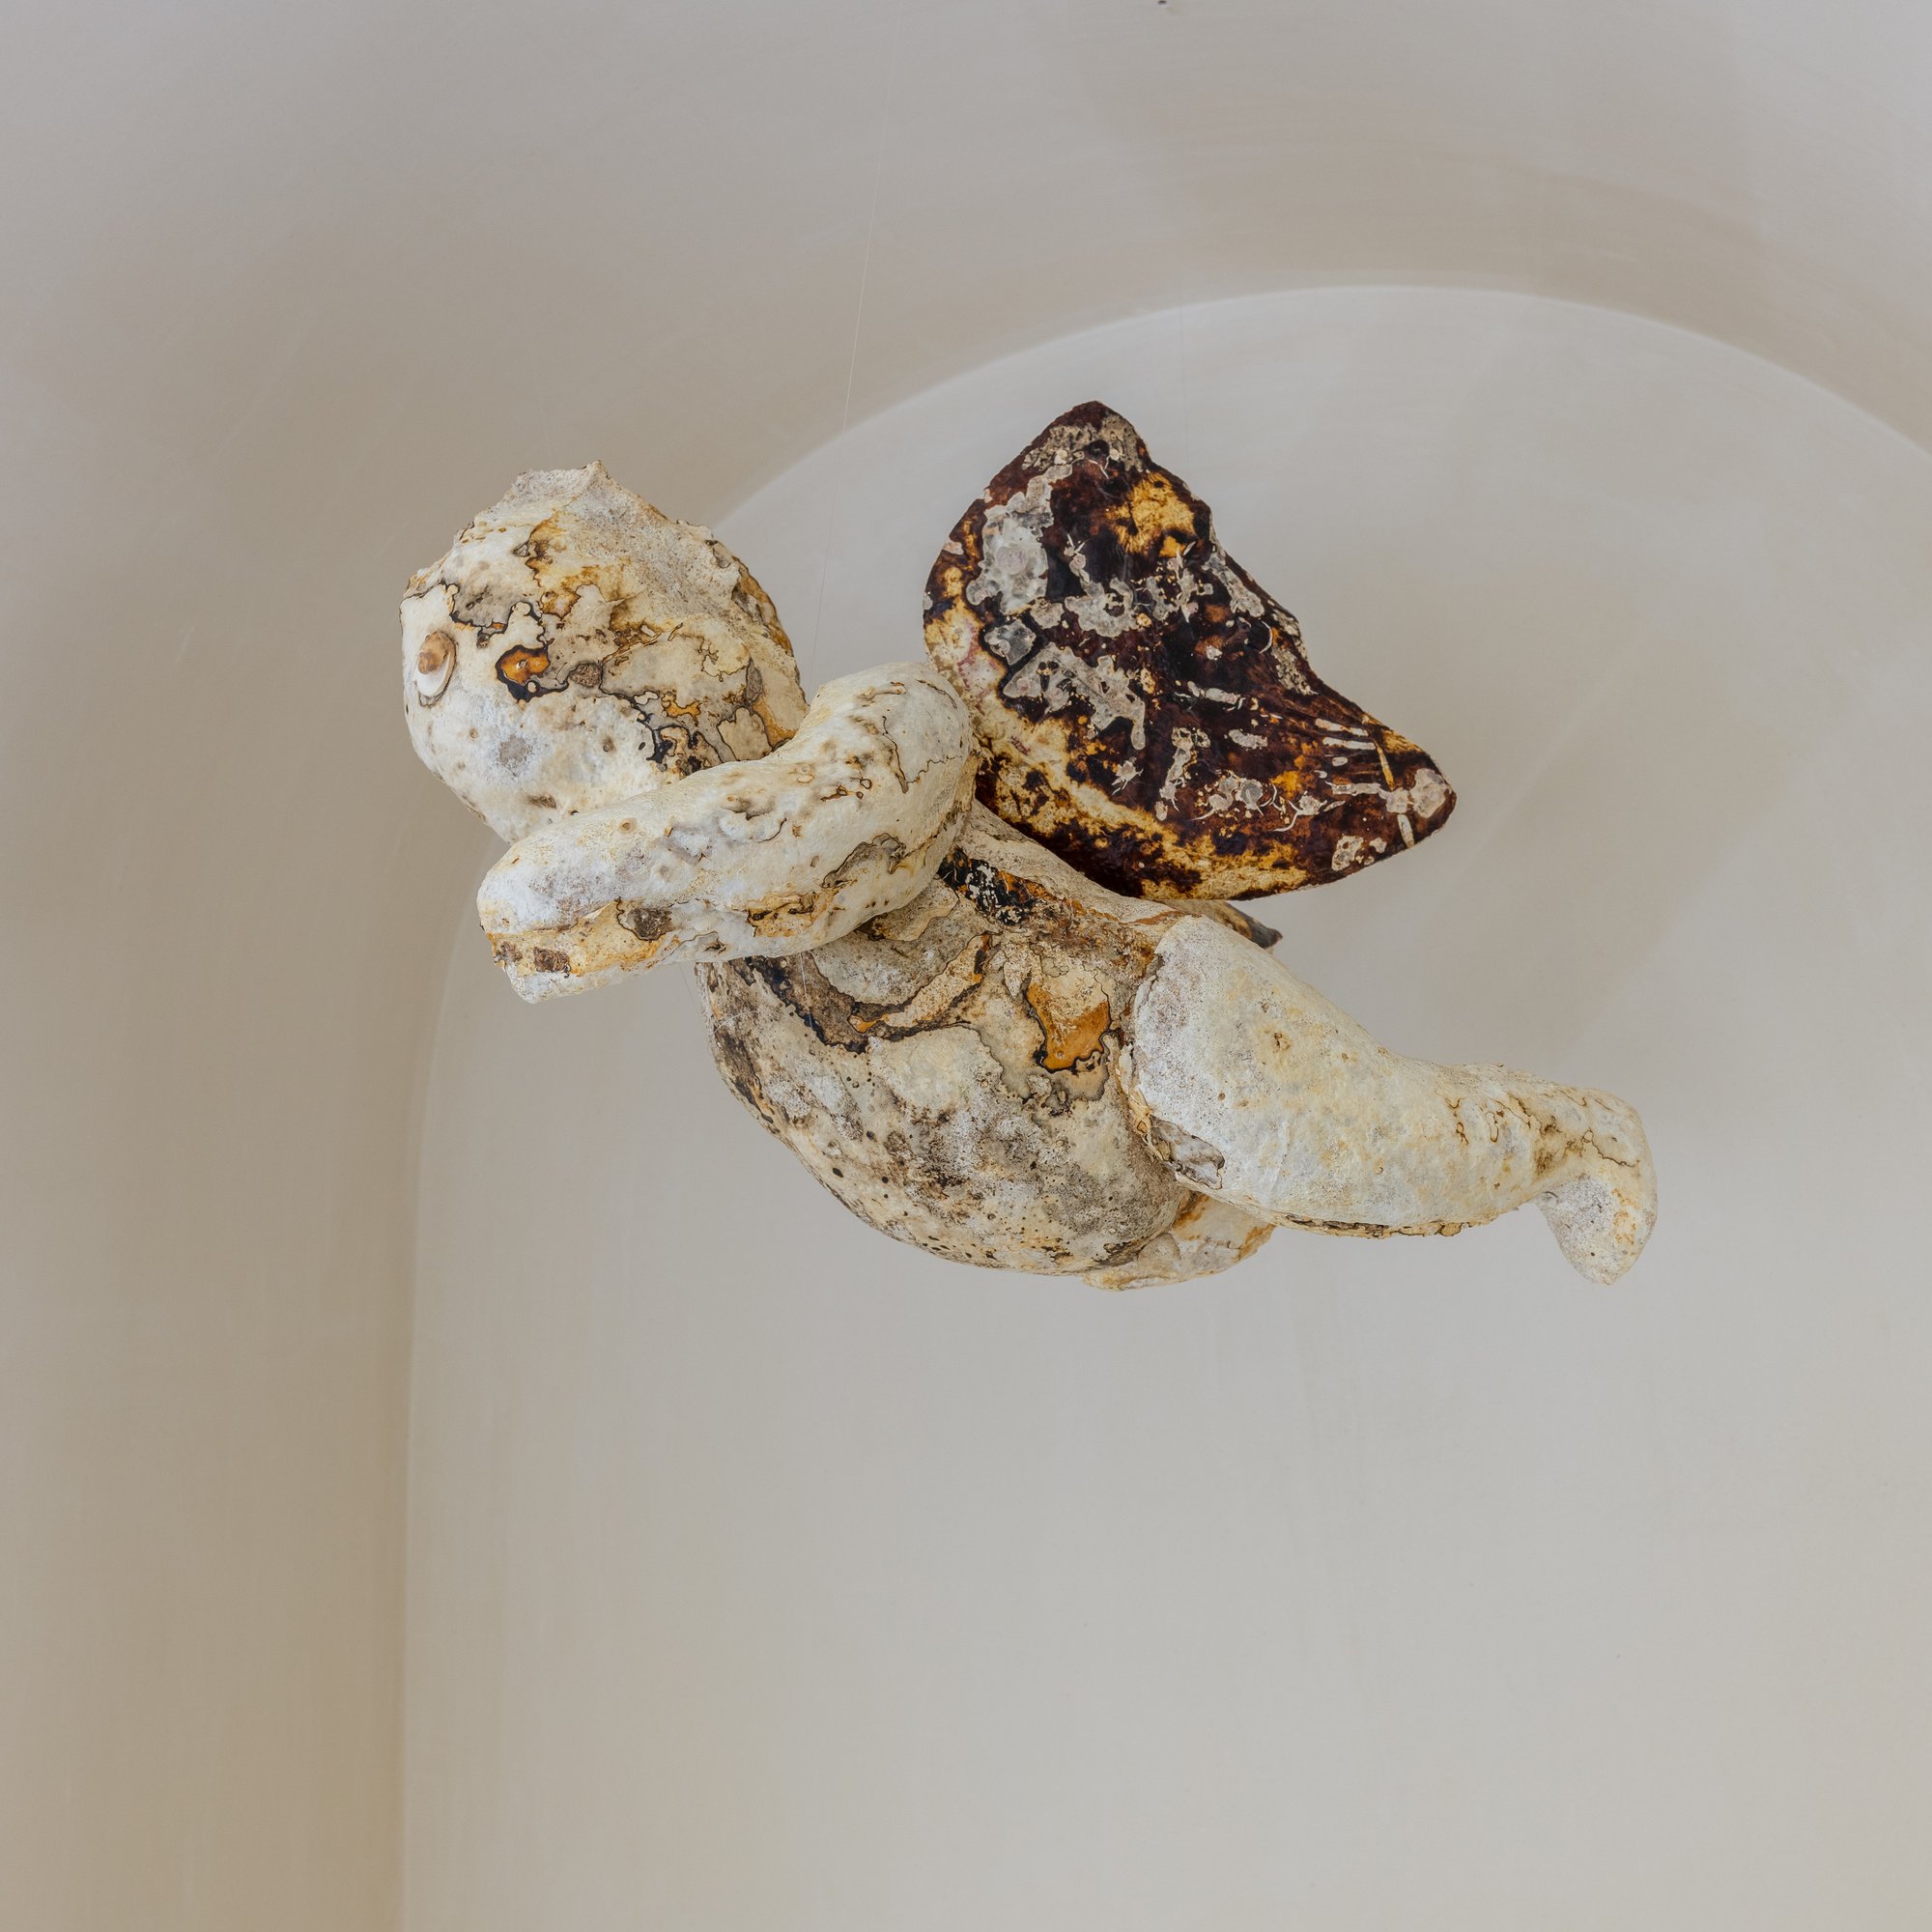 Nour Mobarak, Cupid Copy, detail, Trametes versicolor mycelium, glass beads, 32 cm x 45 cm 32 cm (12 5/8 x 17 3/4 x 12 5/8 in), 2023